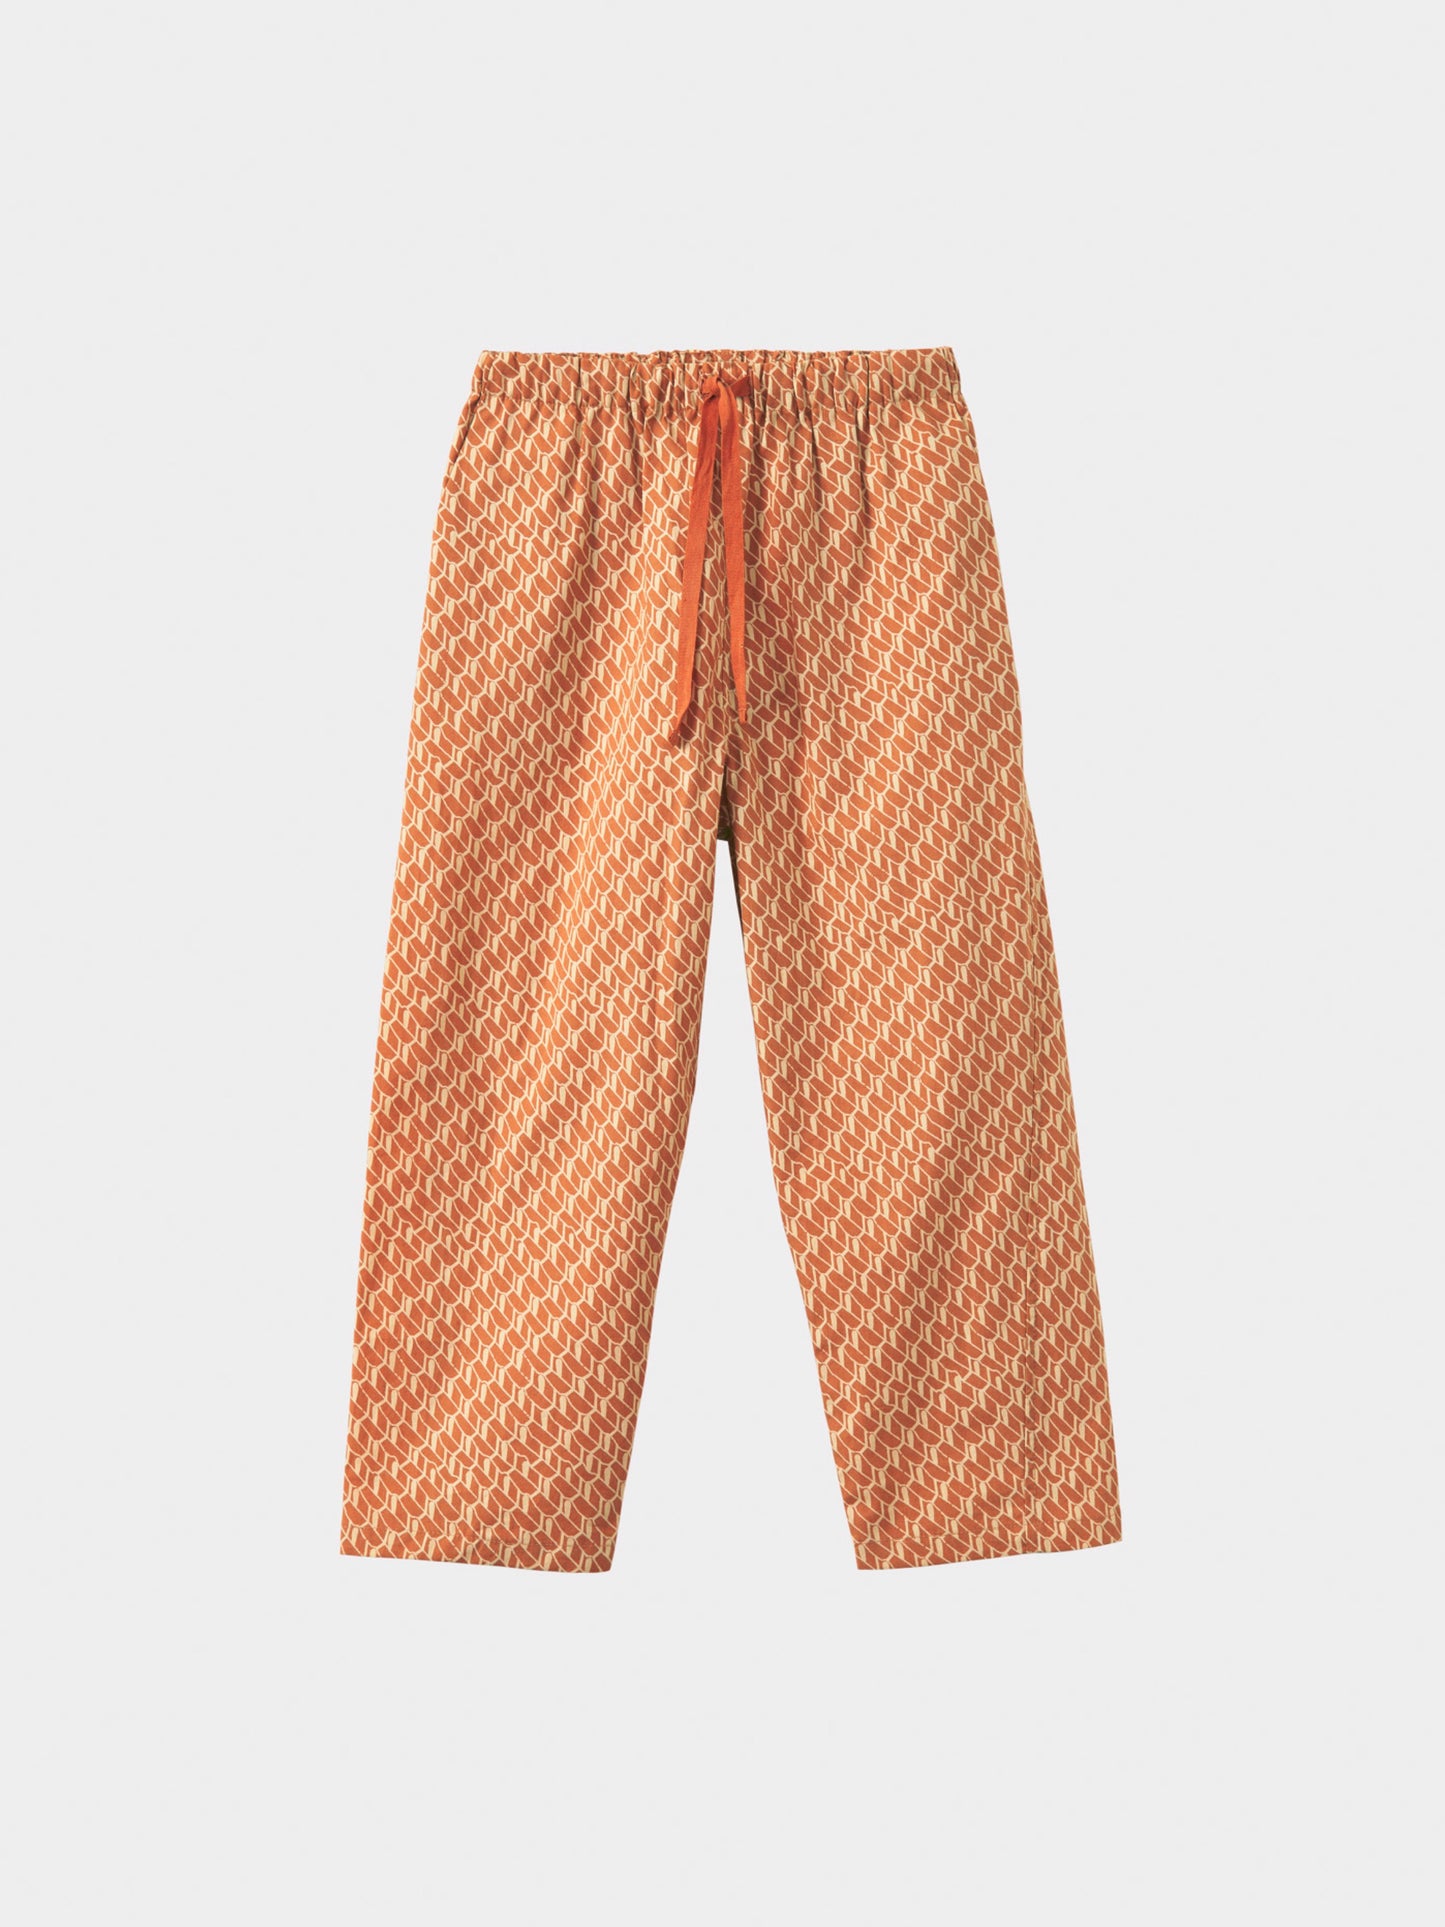 Caramel - Leda Trousers - Apricot geo print